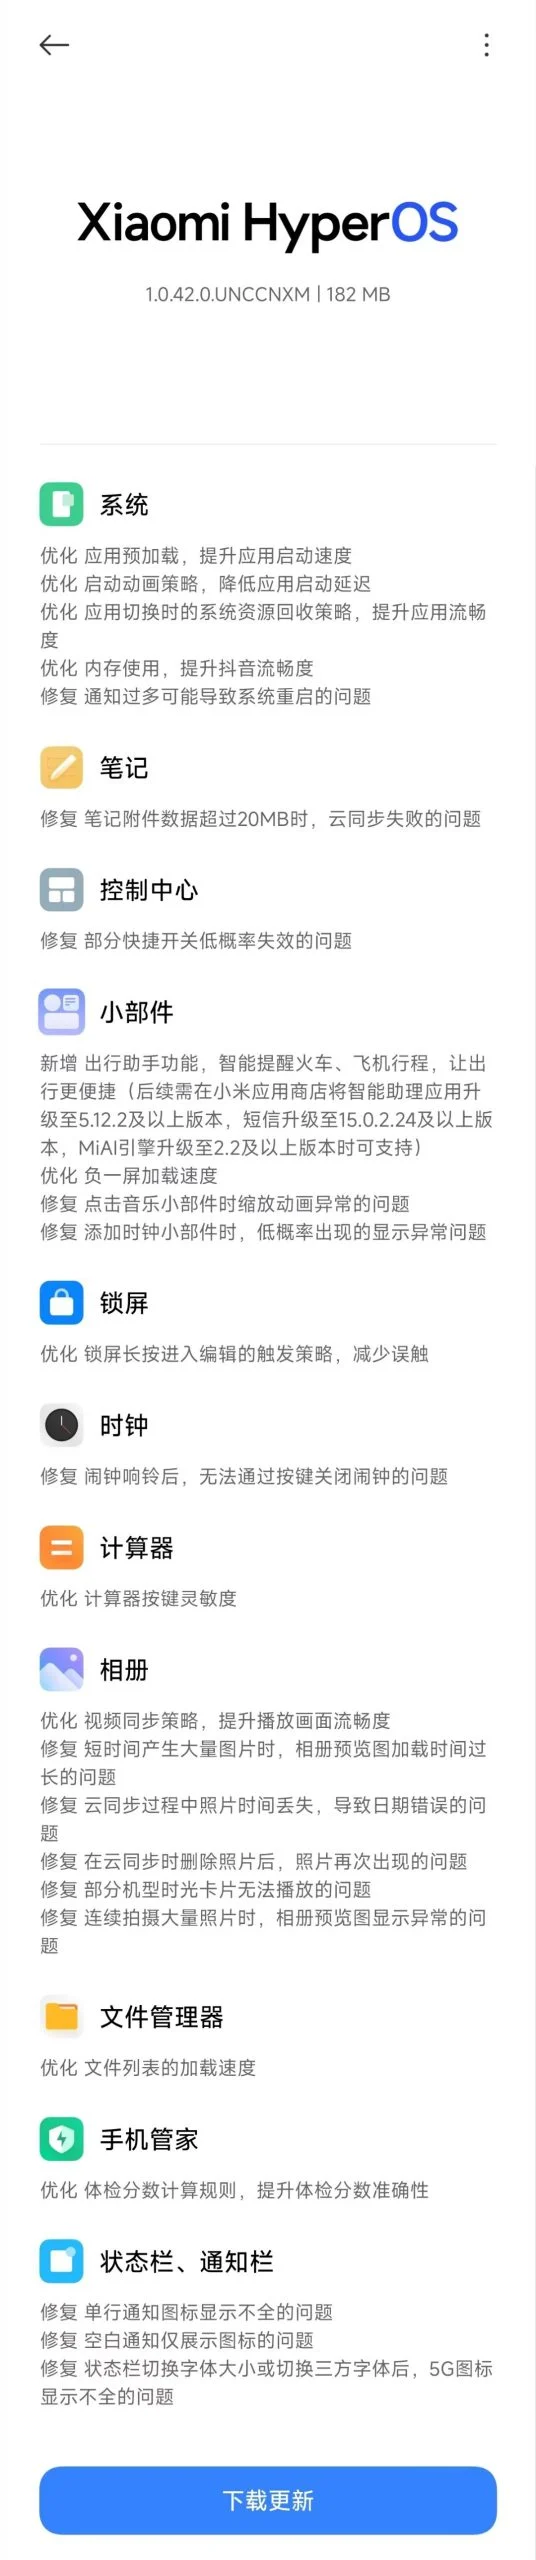 (Image source: Xiaomi via Gizmochina)